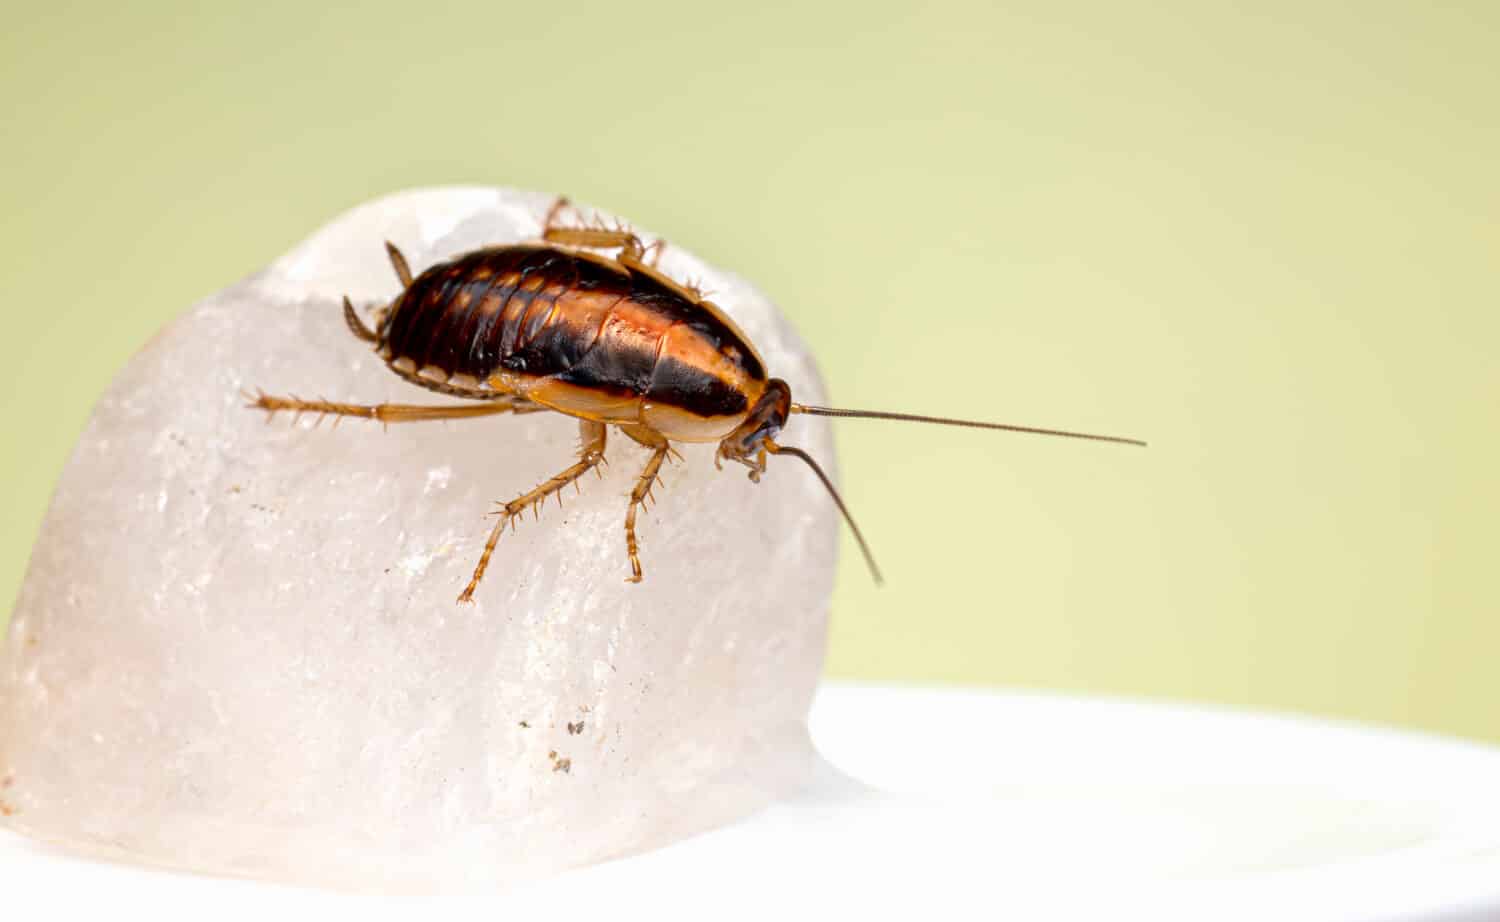 The German cockroach (Blatella germanica)